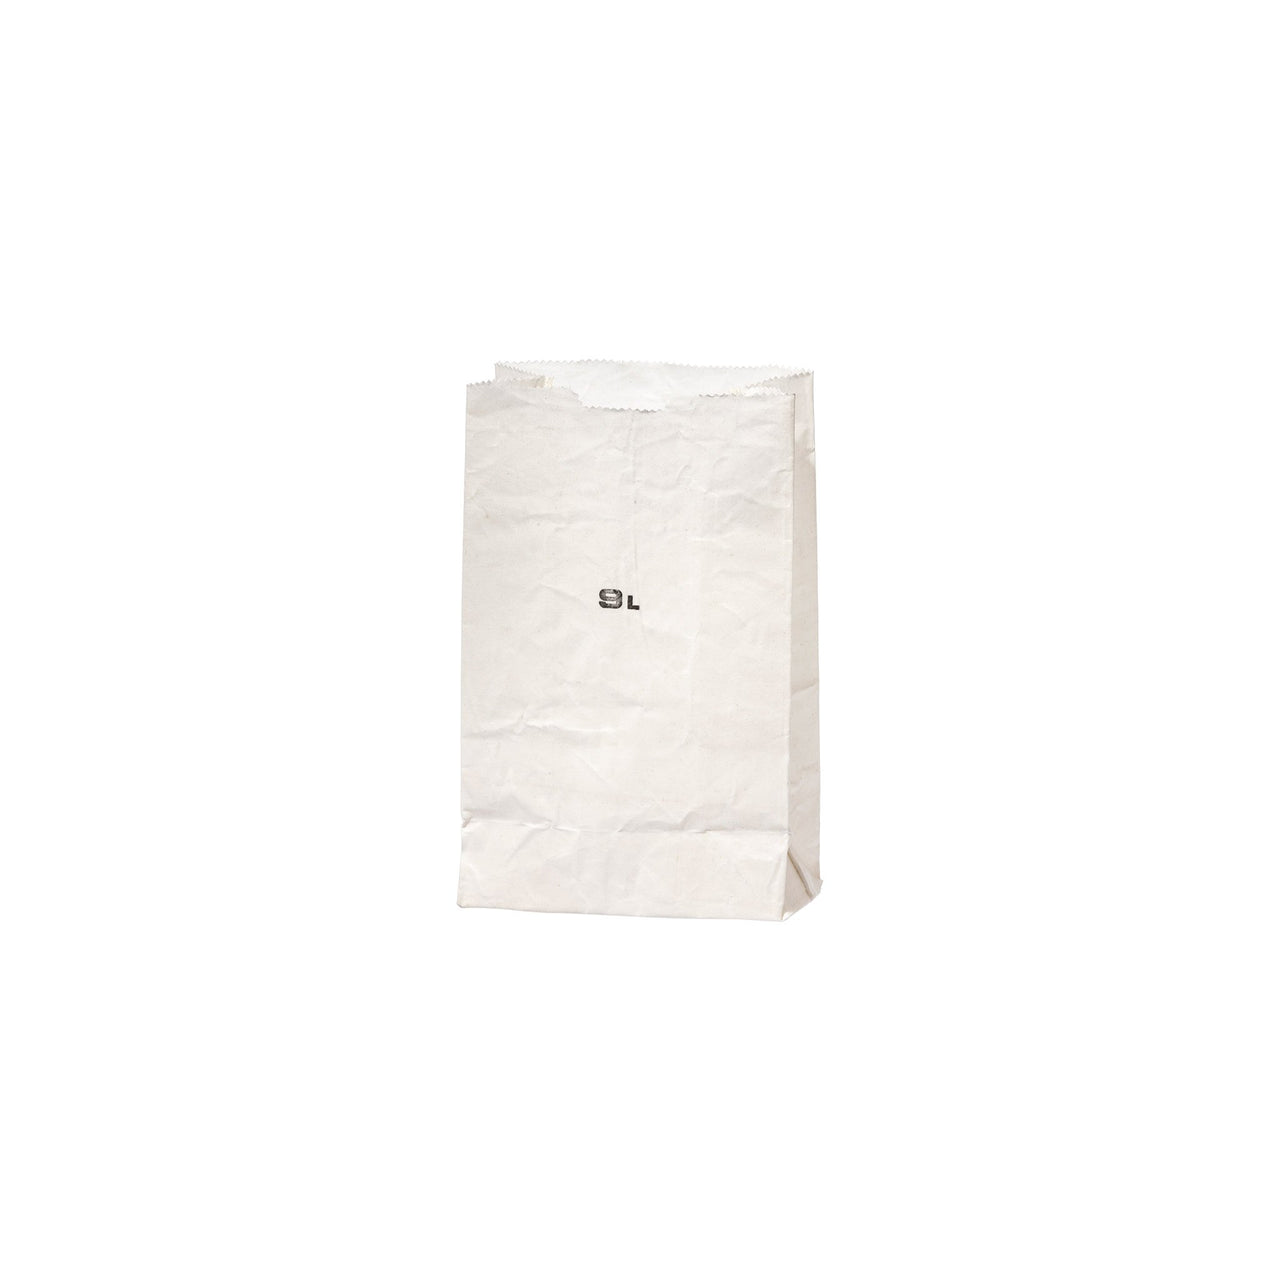 Grocery Bag 9L White